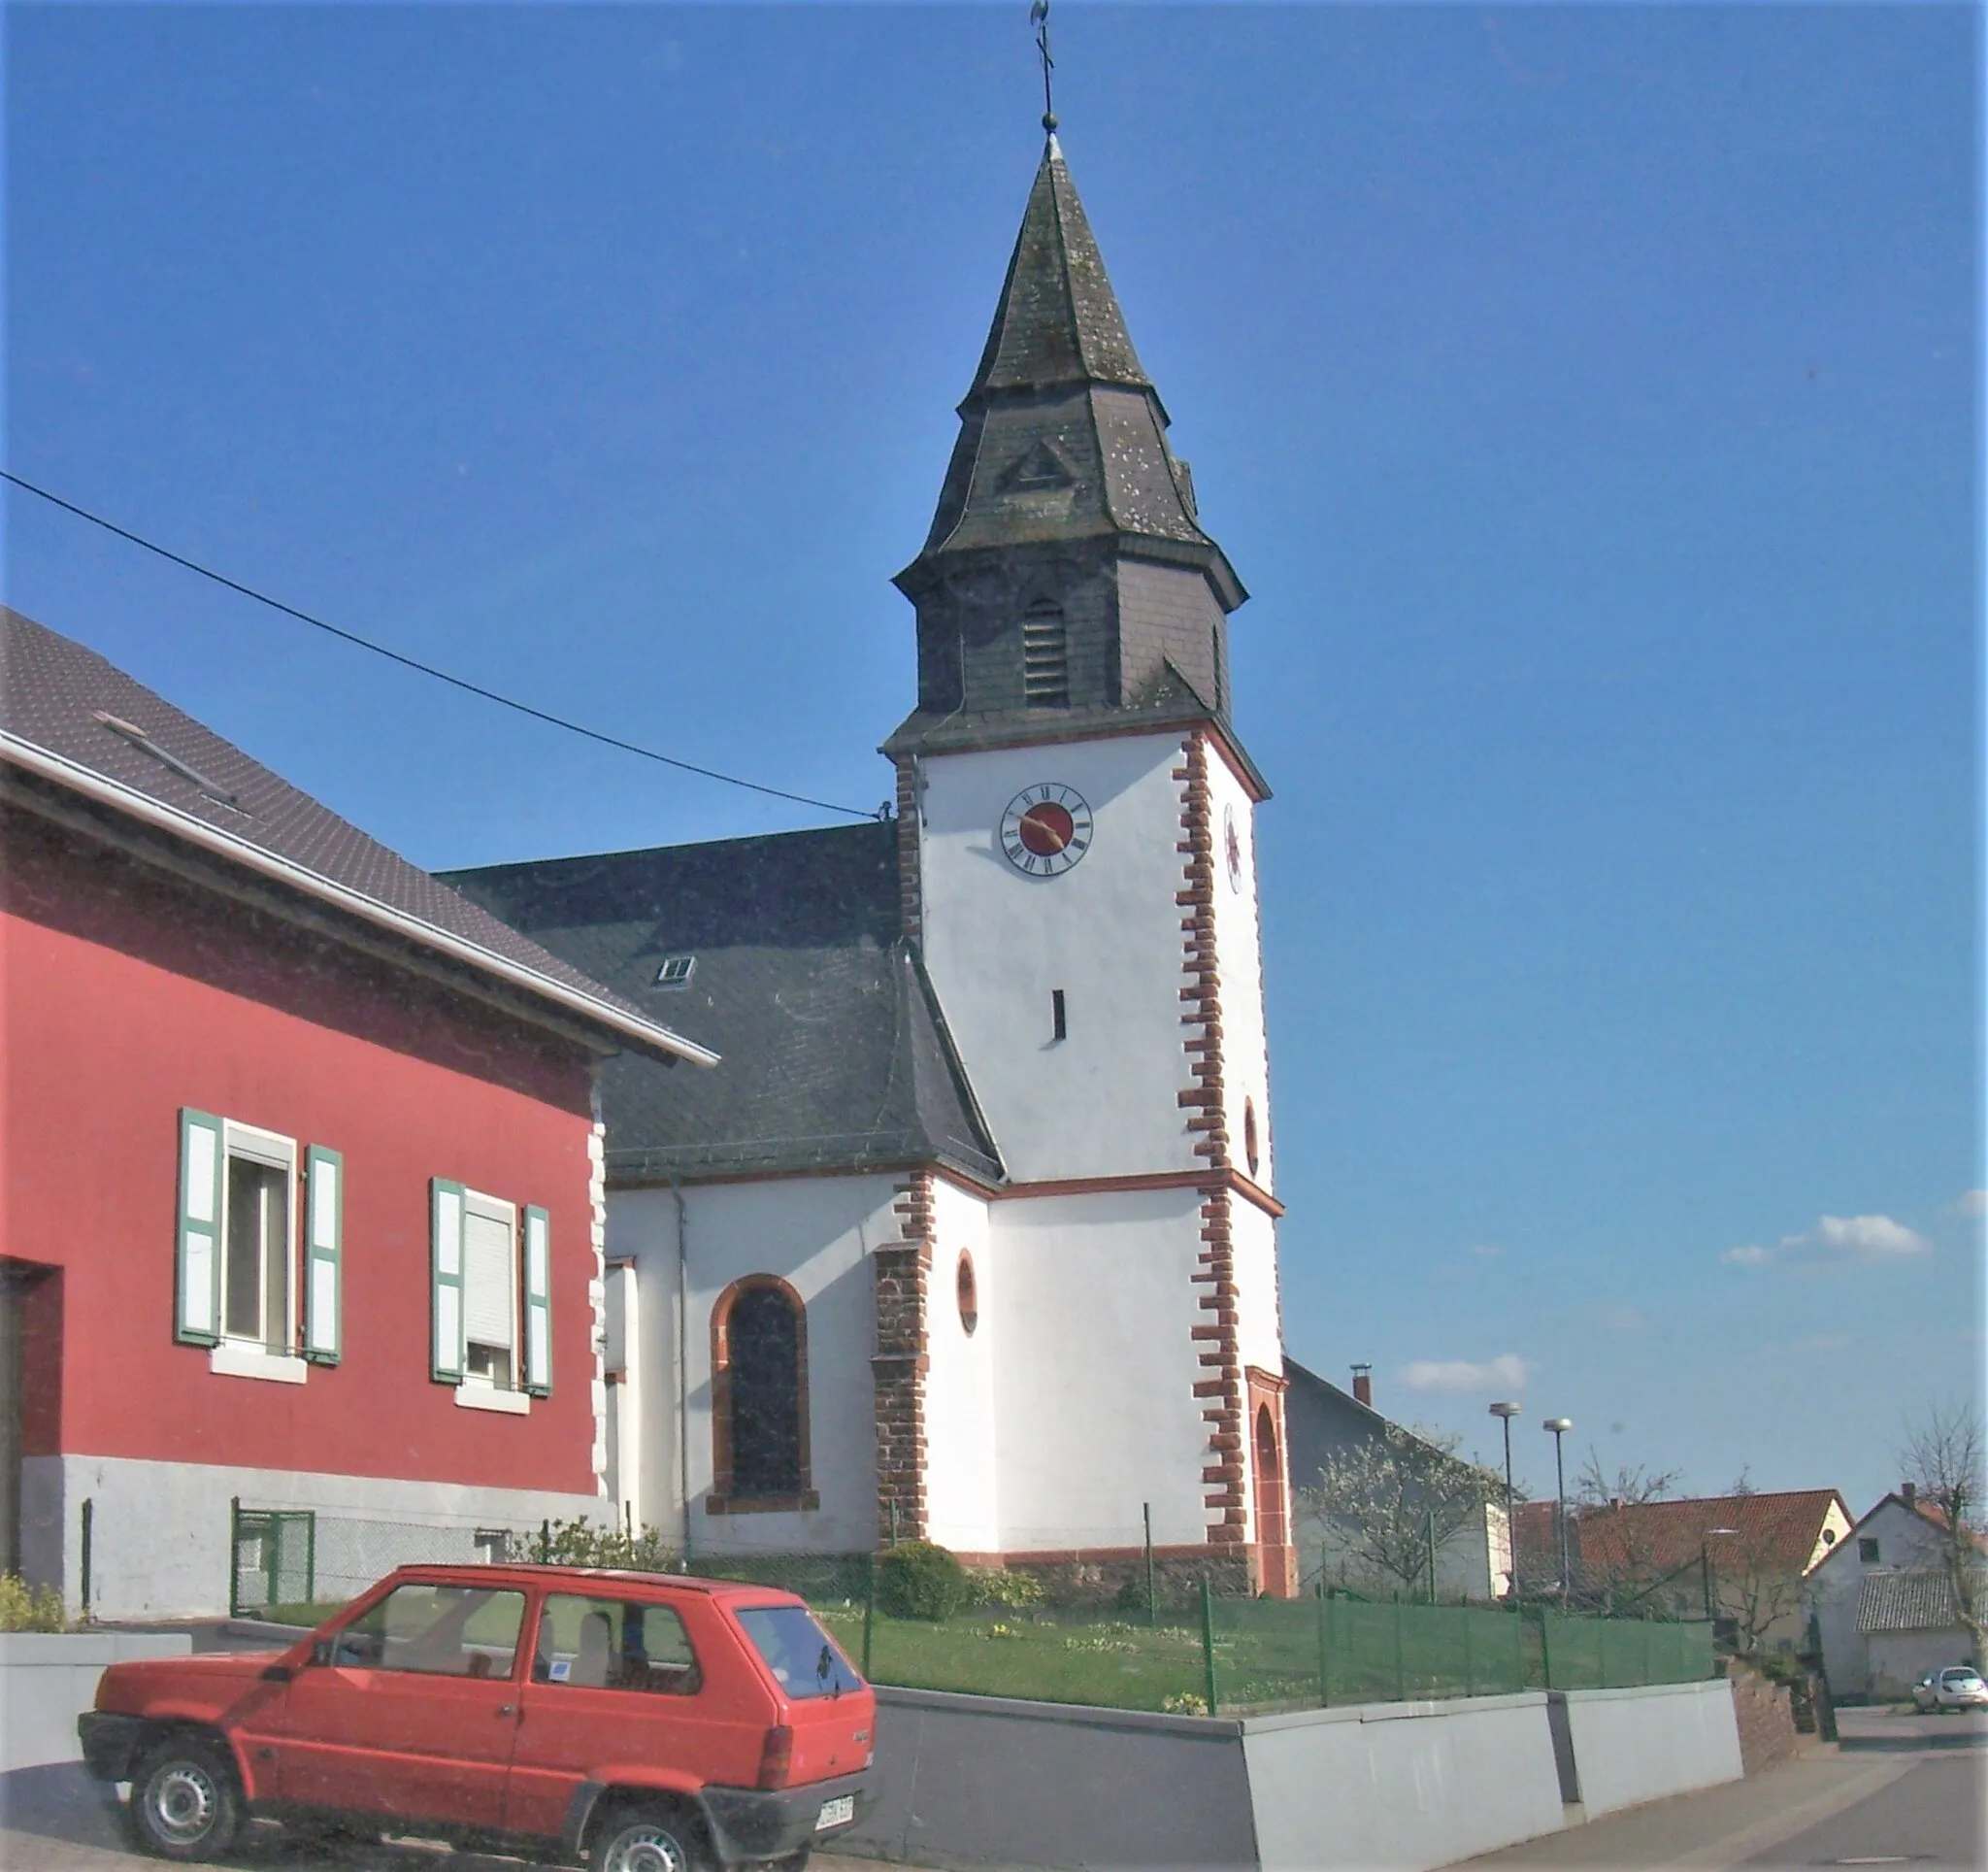 Photo showing: The church "Herz-Jesu" in Bergen, Saarland, Germany